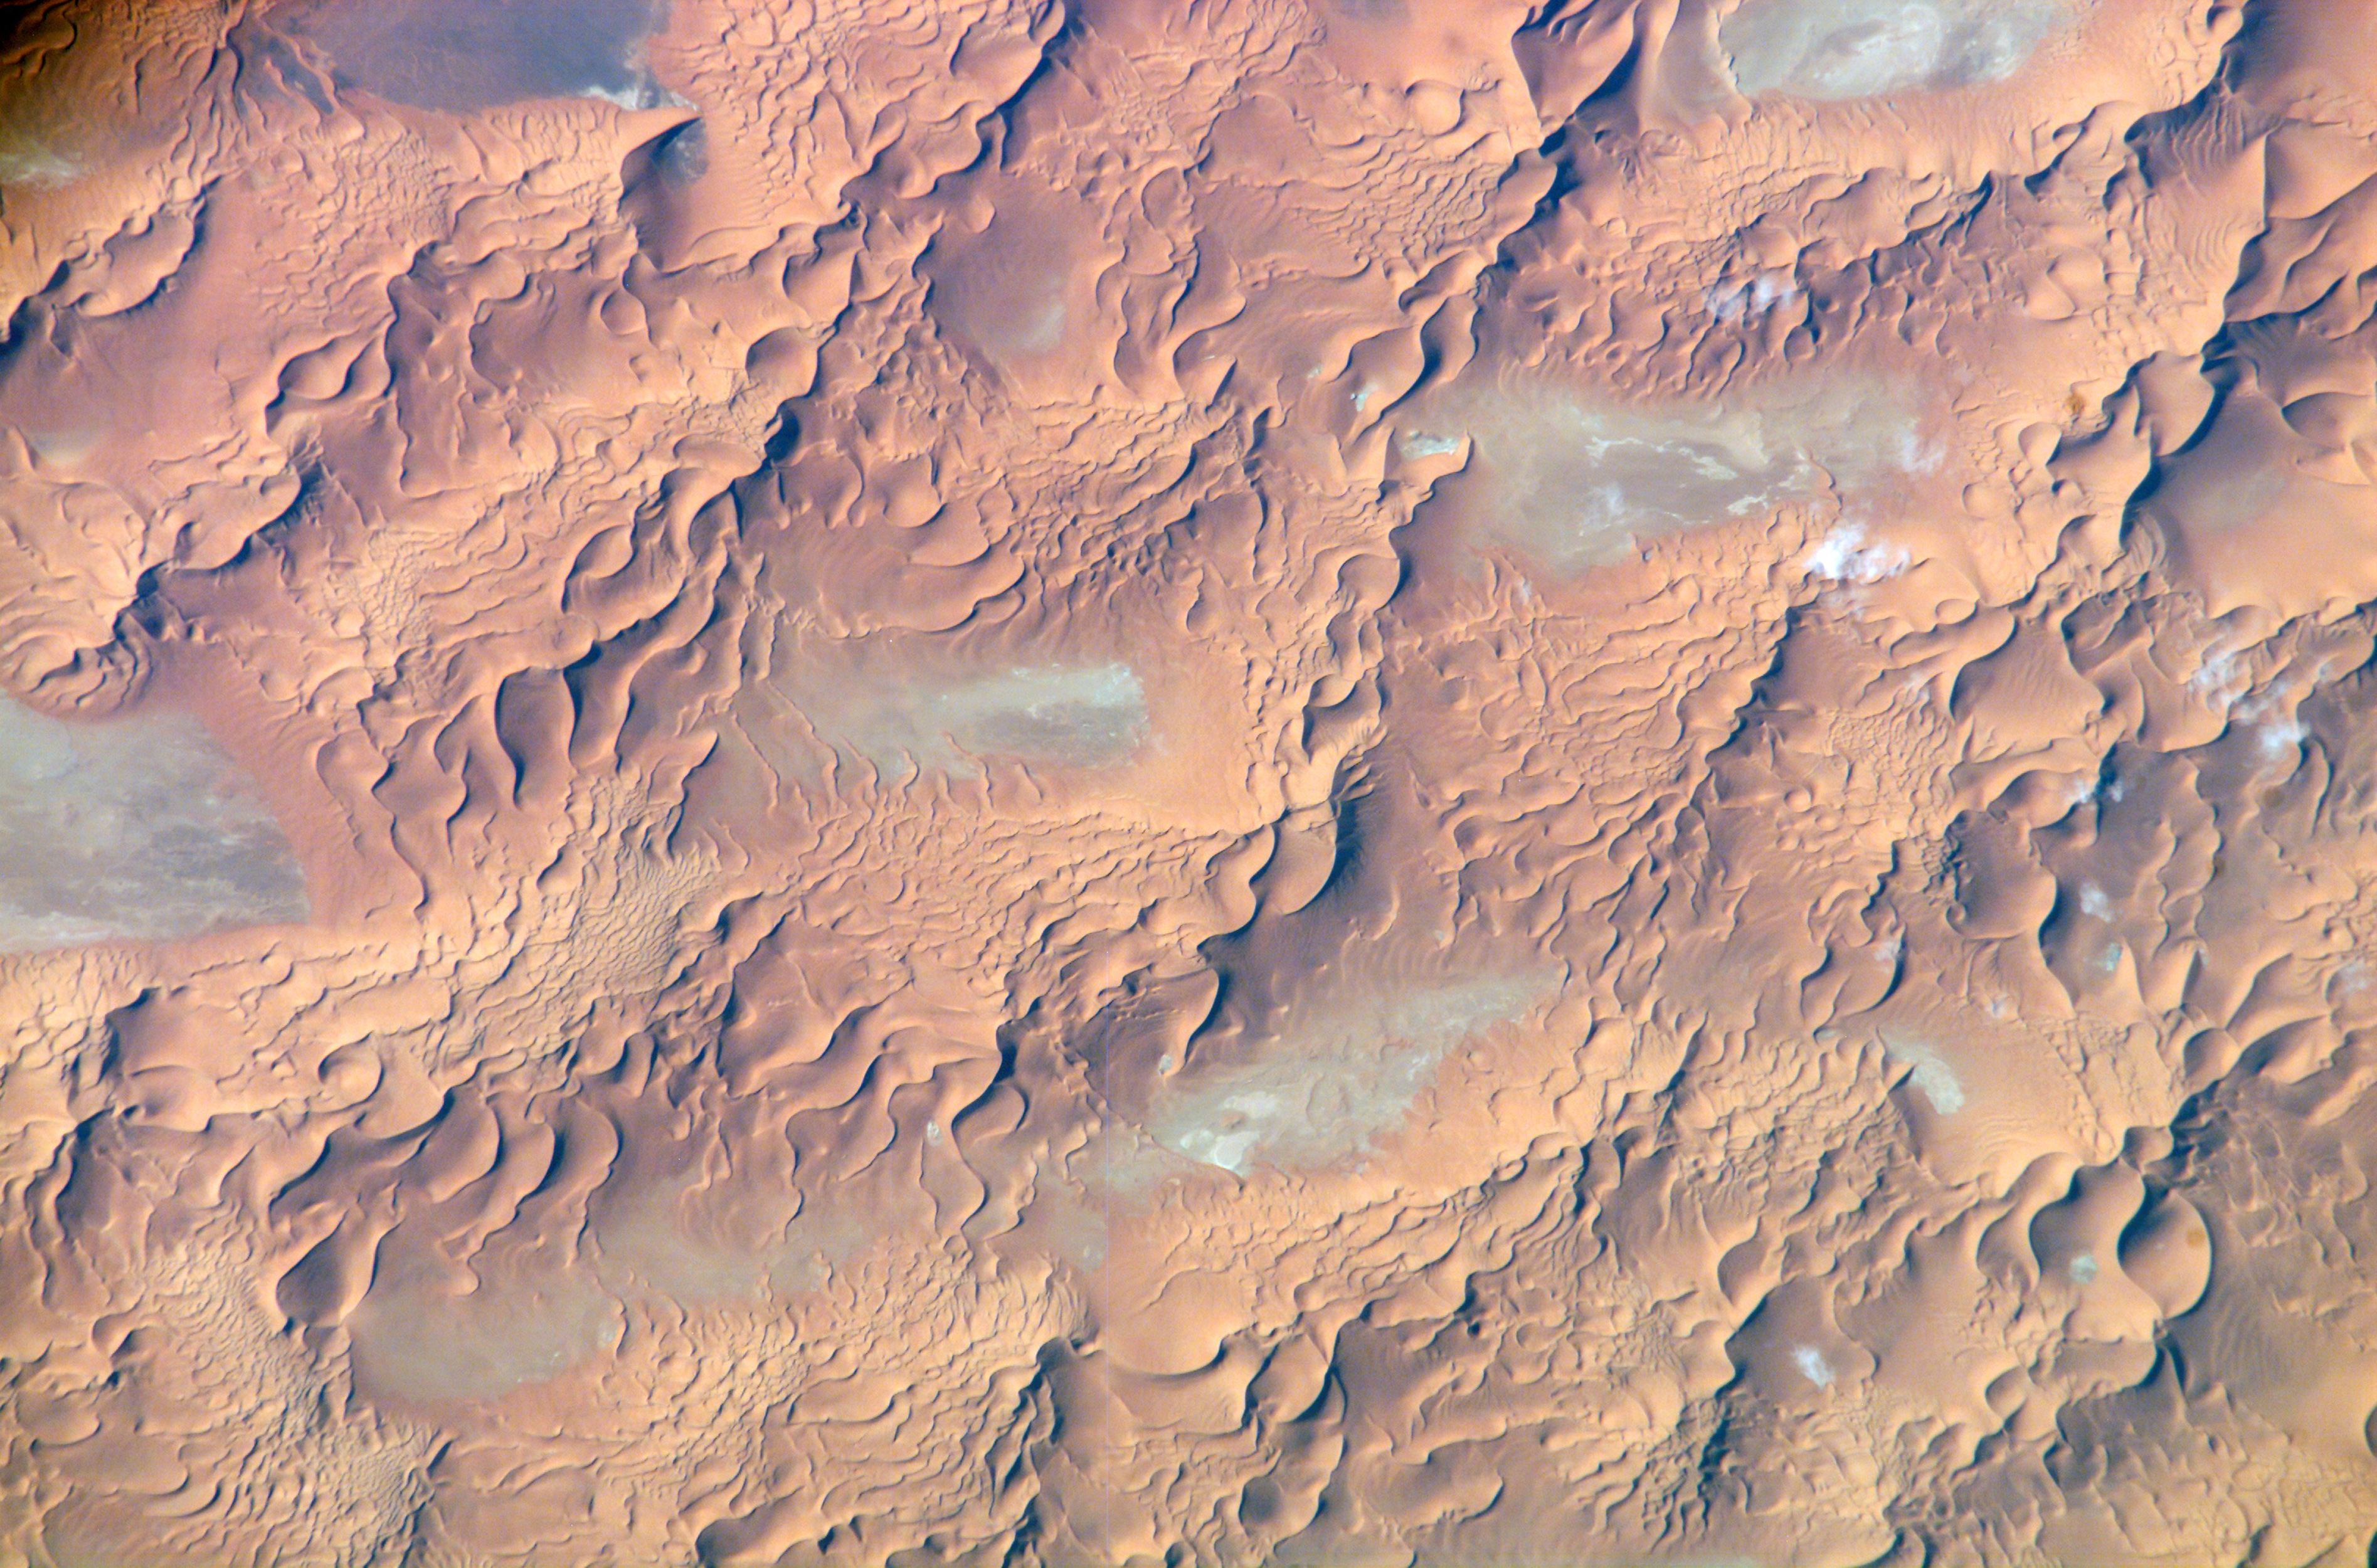 NASA Photograph of Issaouane Dune Sea, Eastern Algeria.